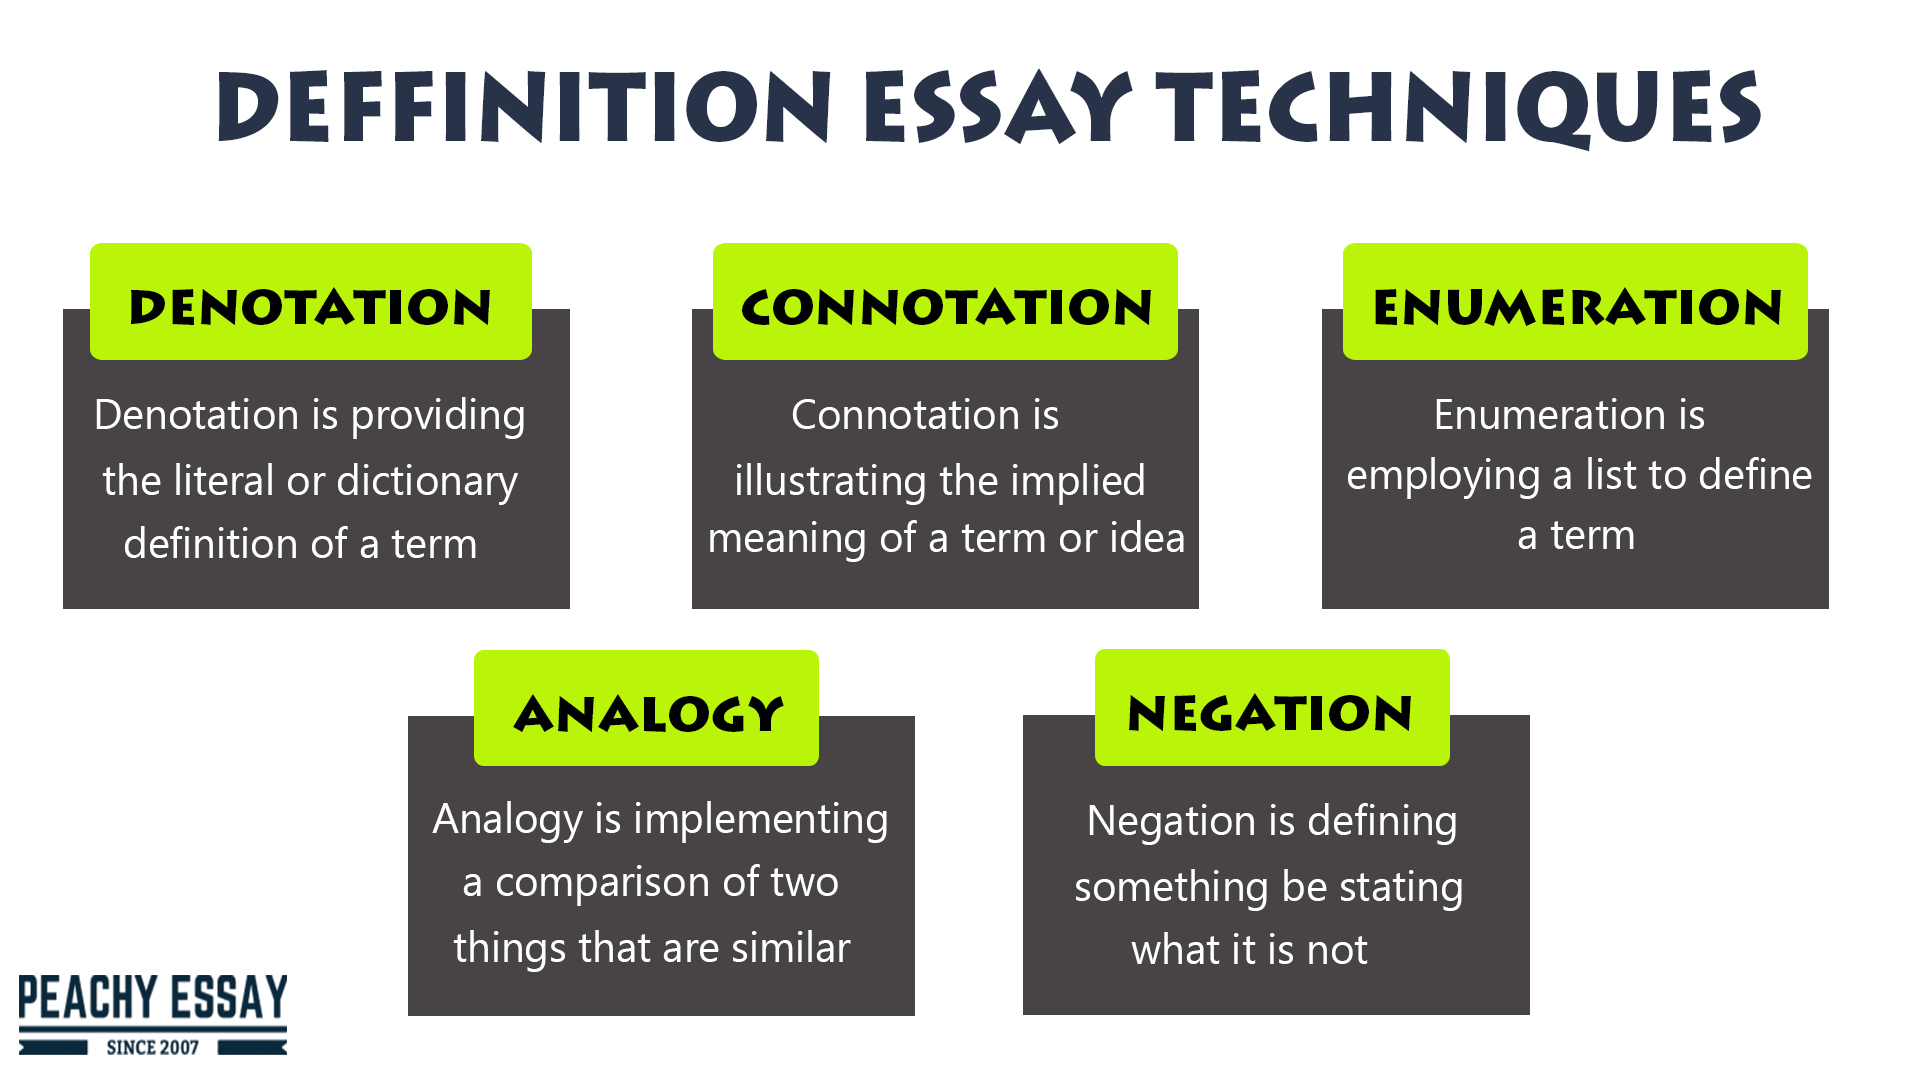 techniques in definition essay